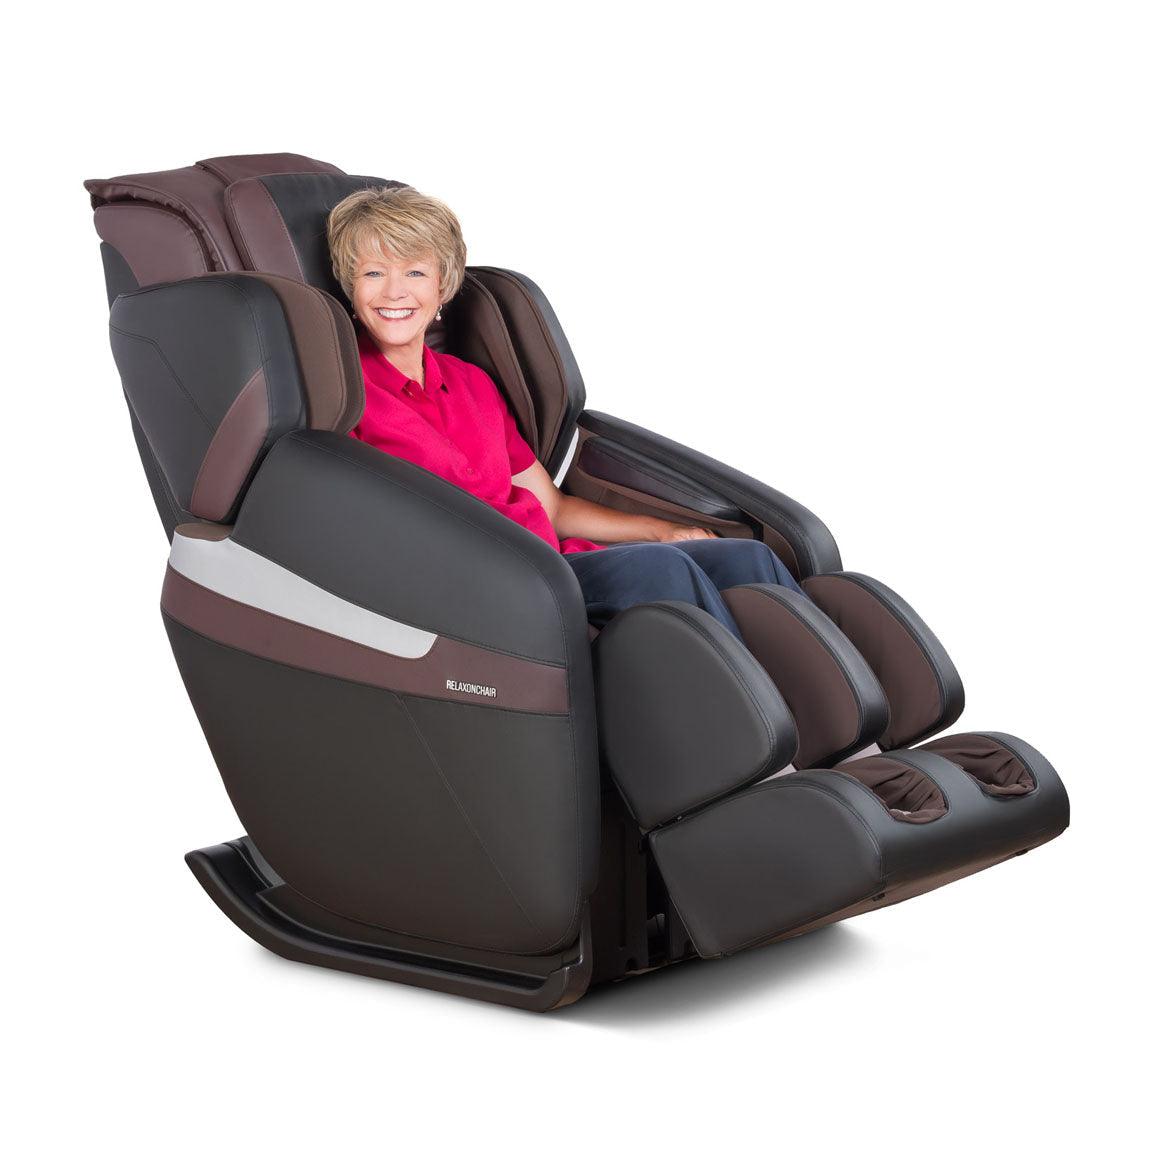 MK-Classic Full Body Massage Chair (Brown)